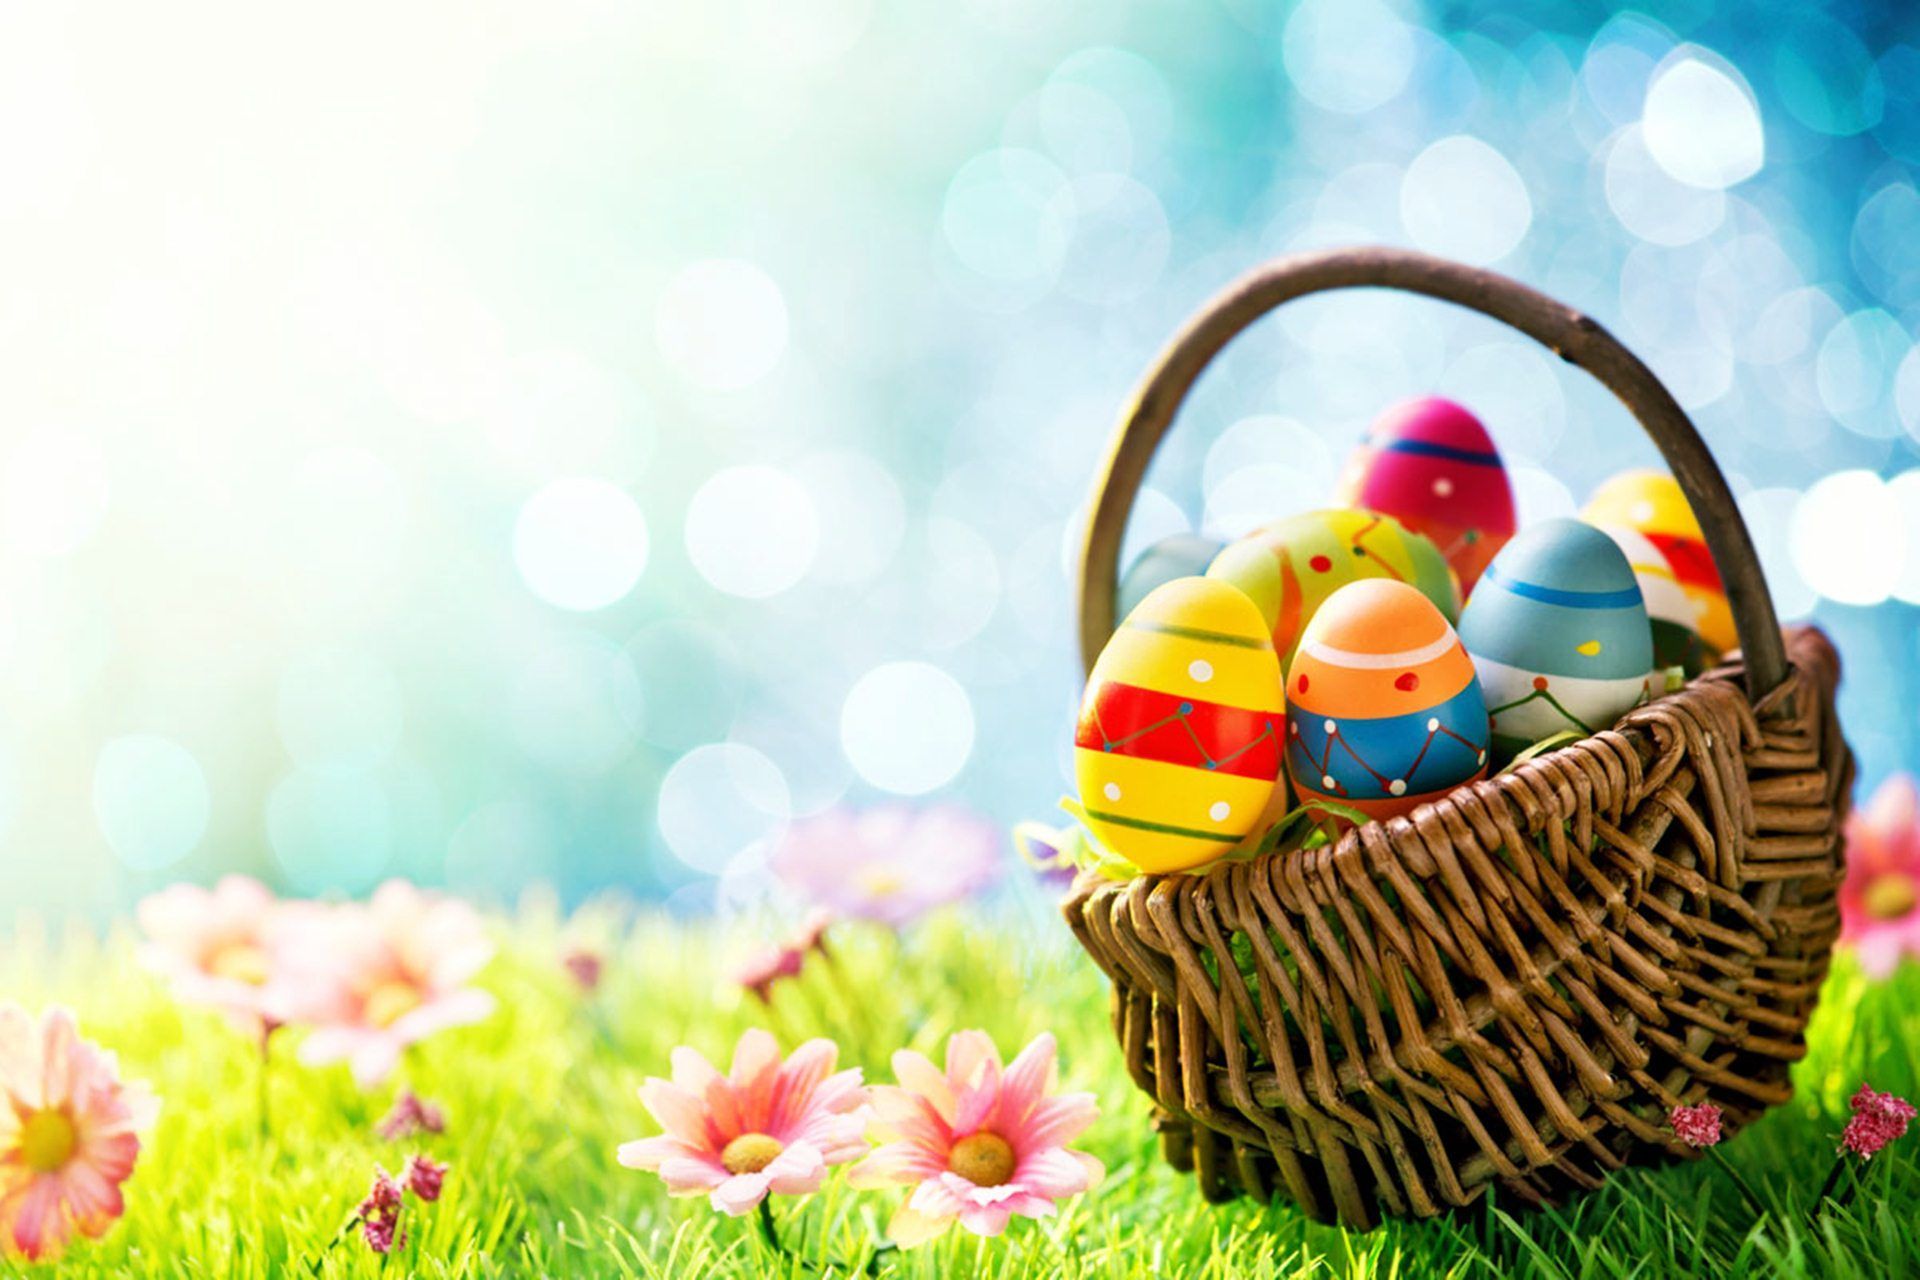 Easter Eggs in a basket wallpaper Easter Image 2020